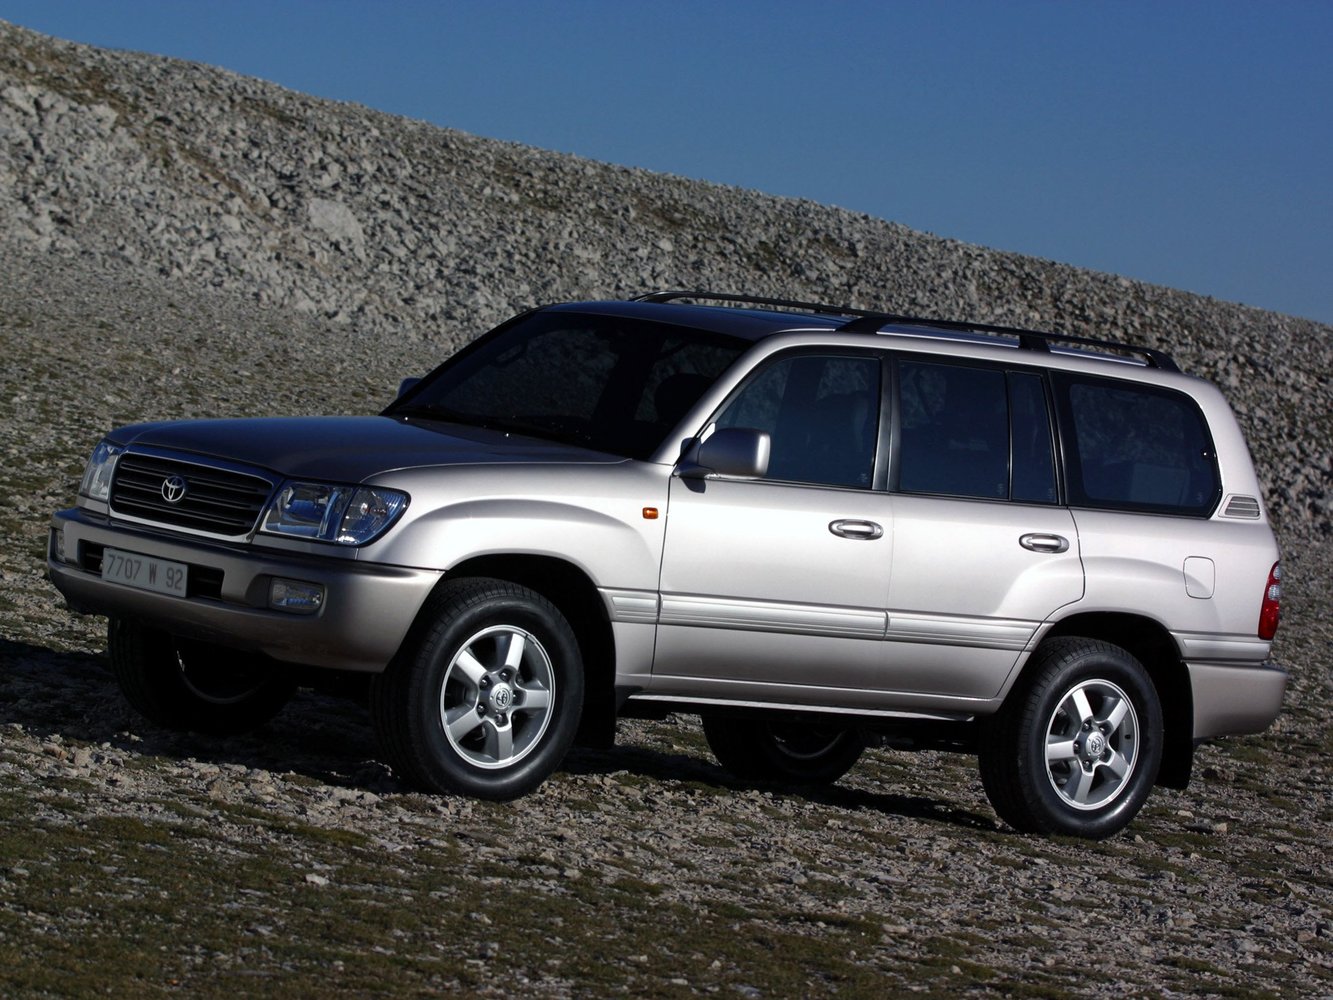 Toyota Land Cruiser 2002 - 2005